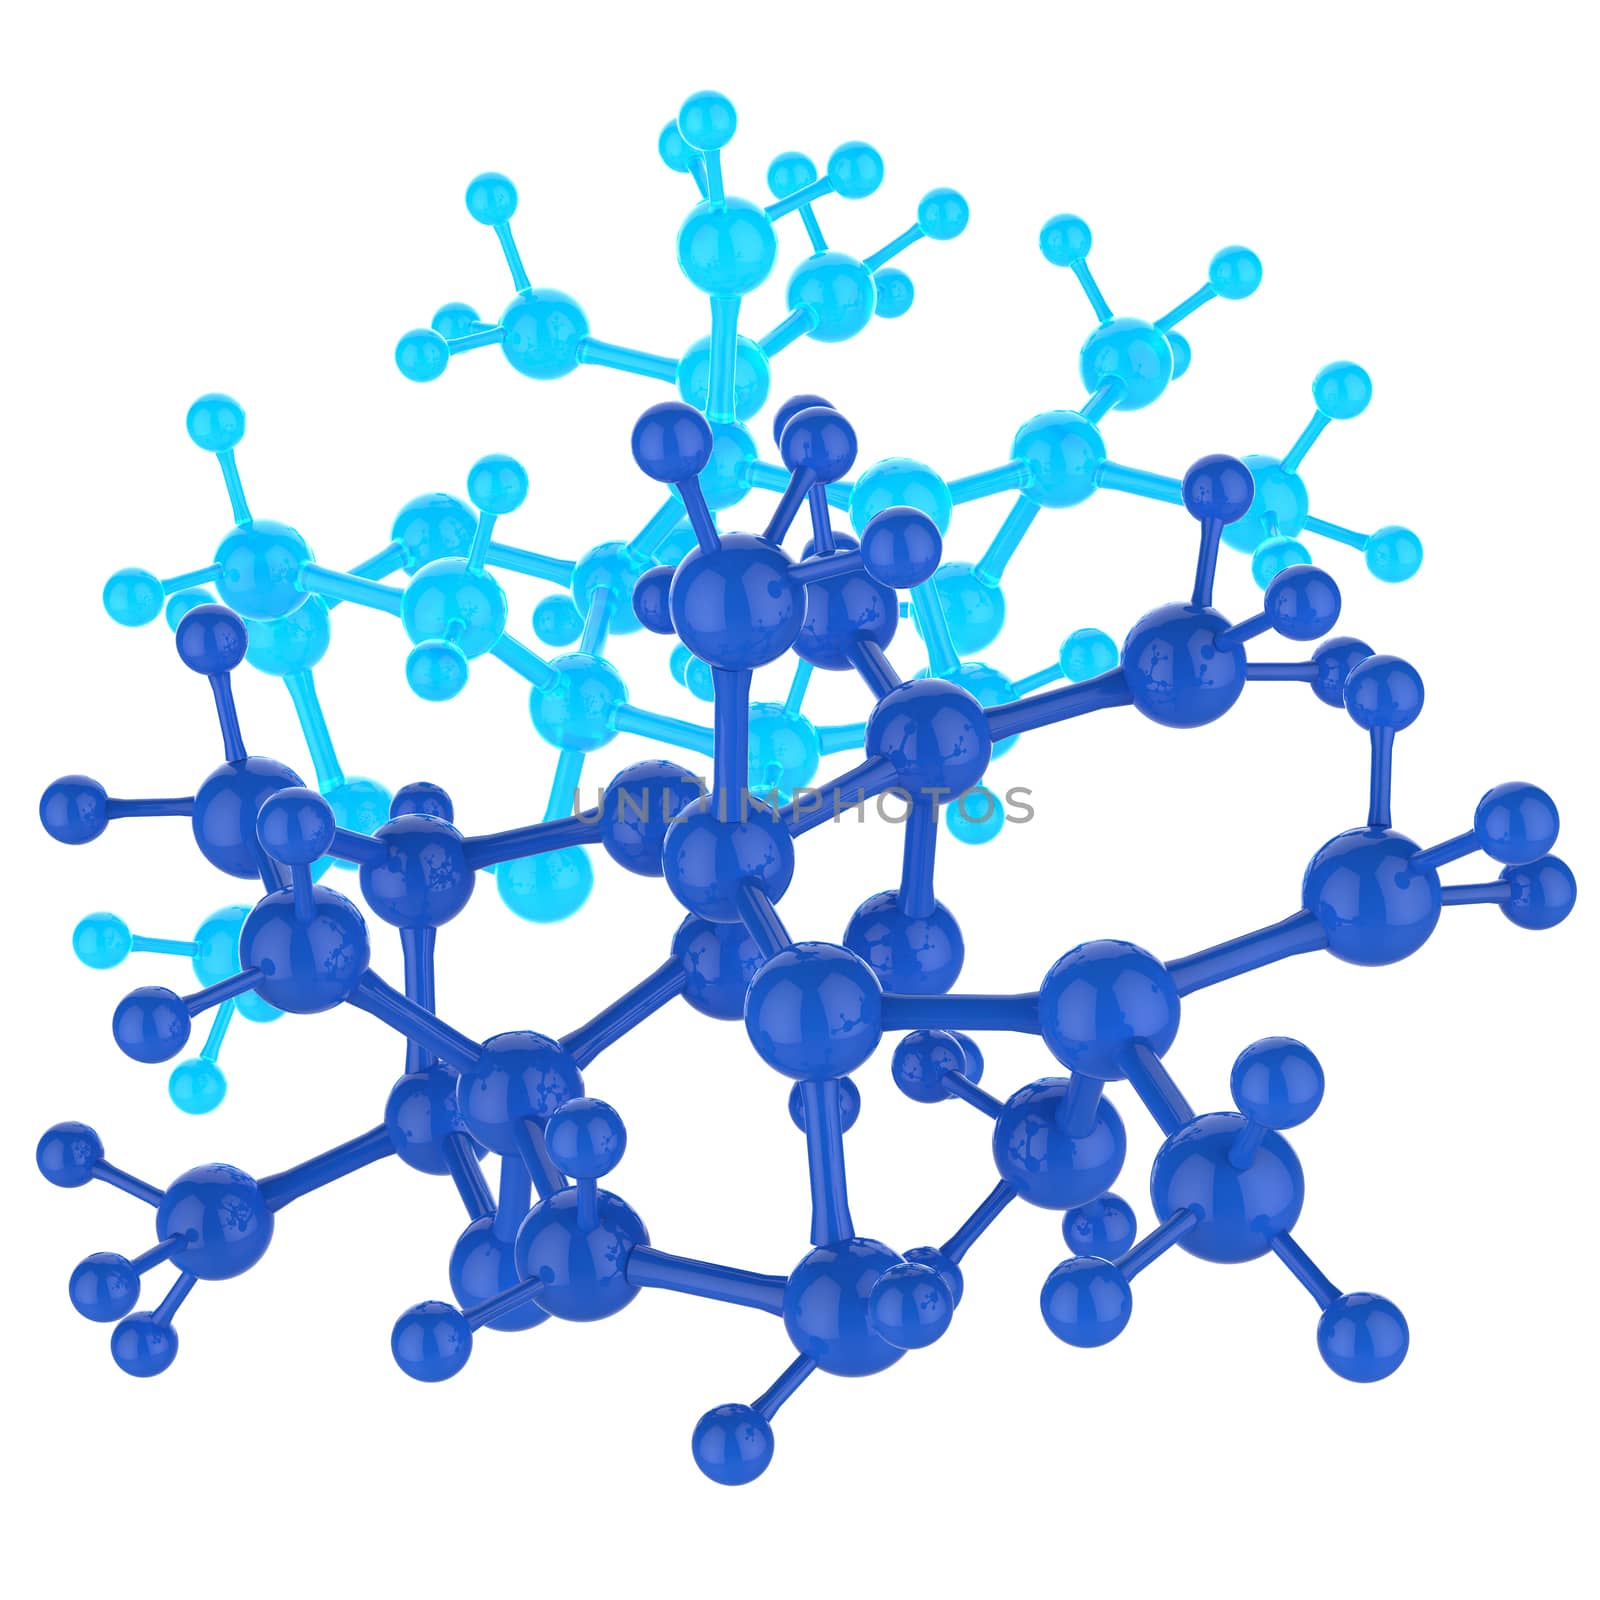 Molecule blue 3d on white background